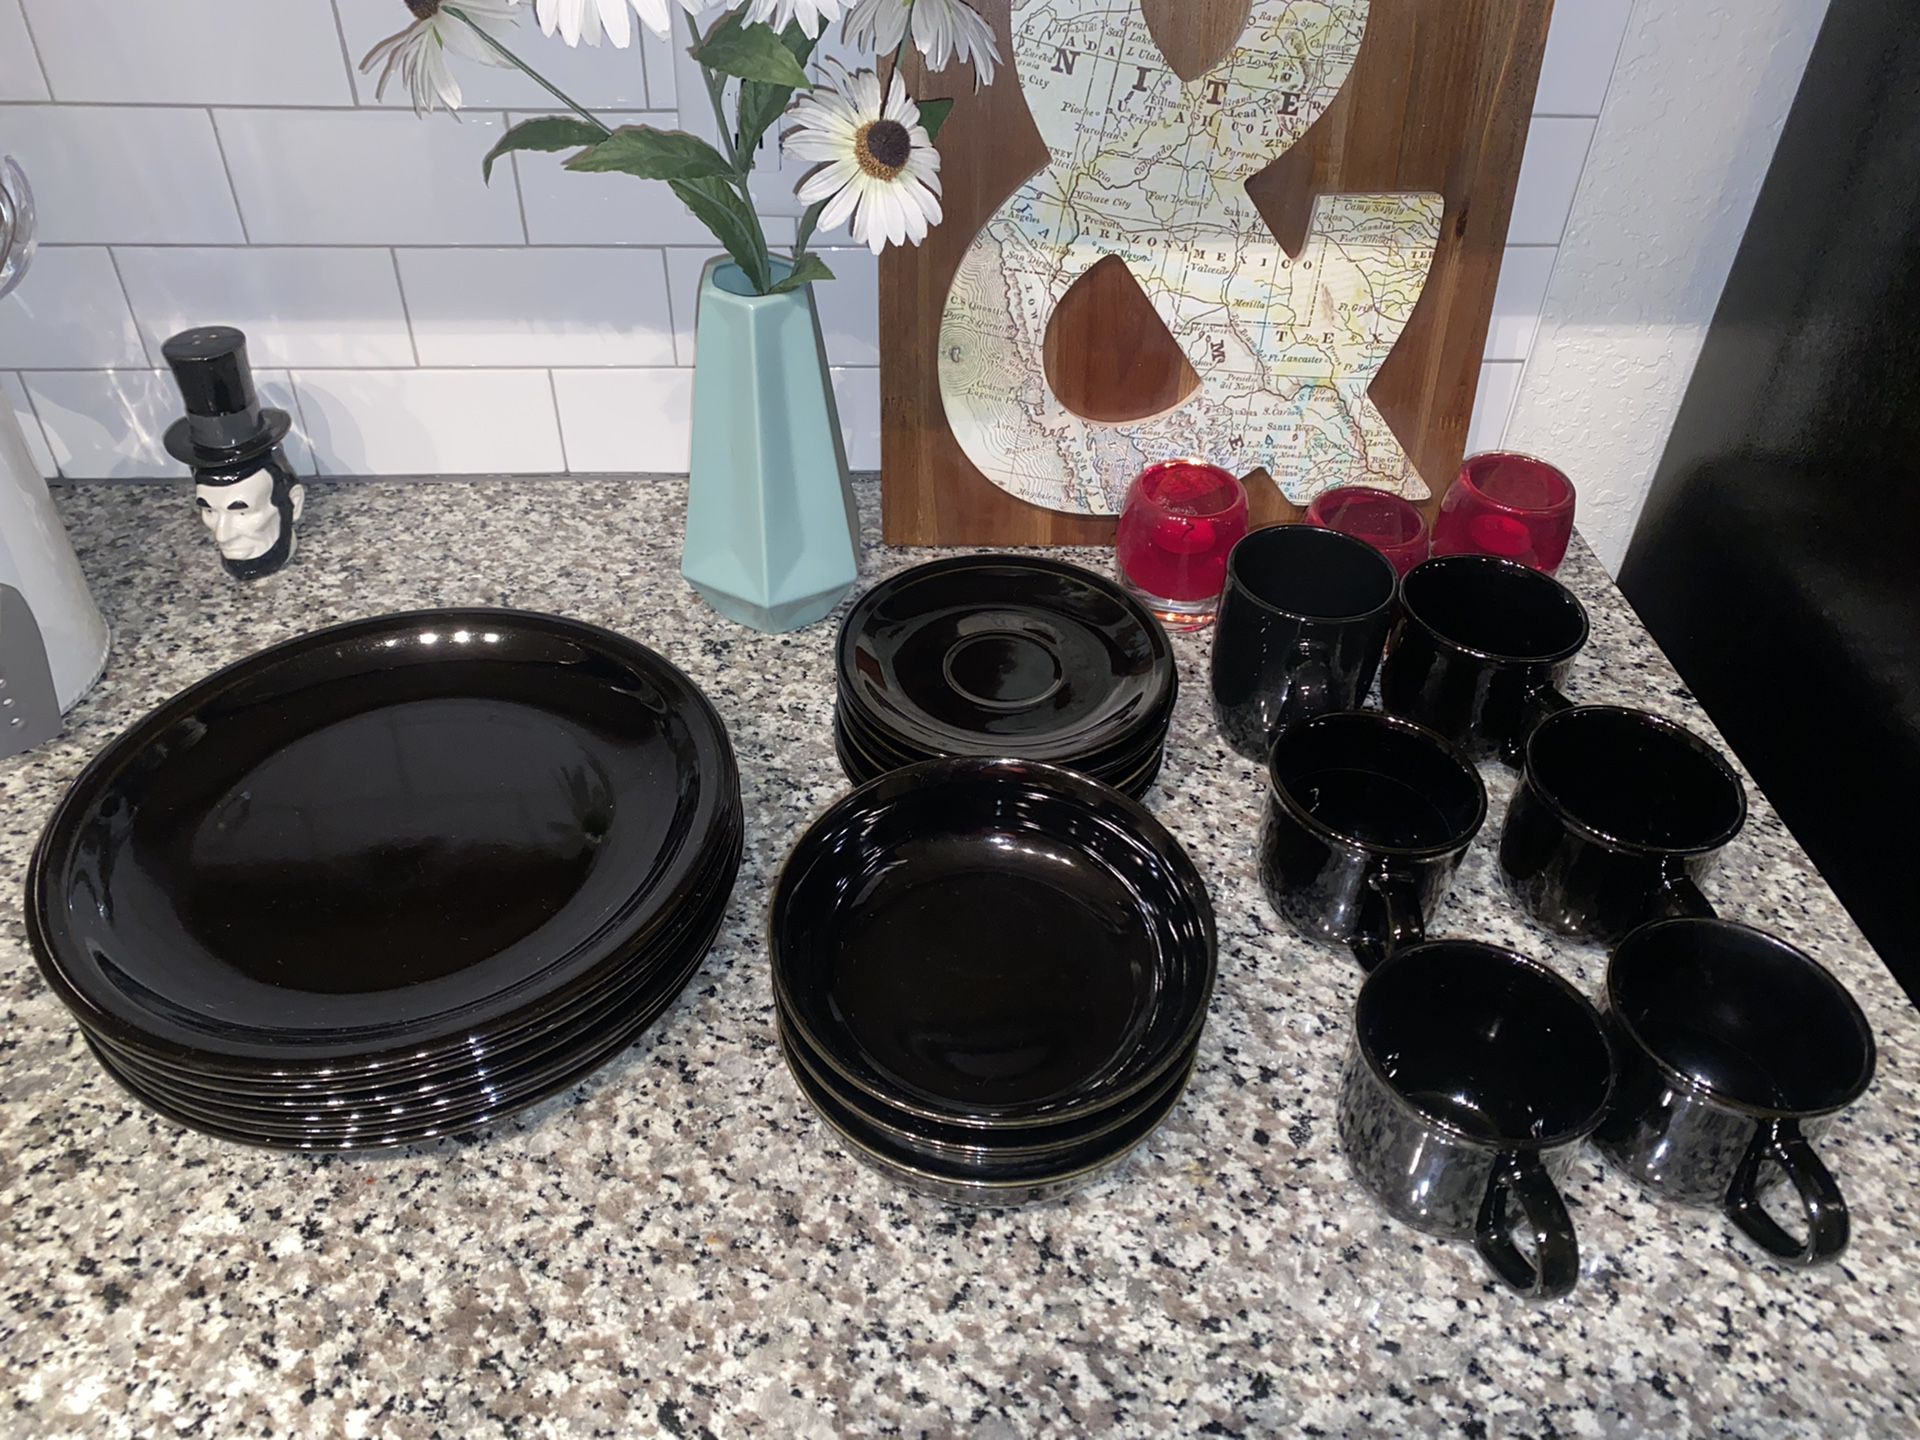 Black plates/dishes